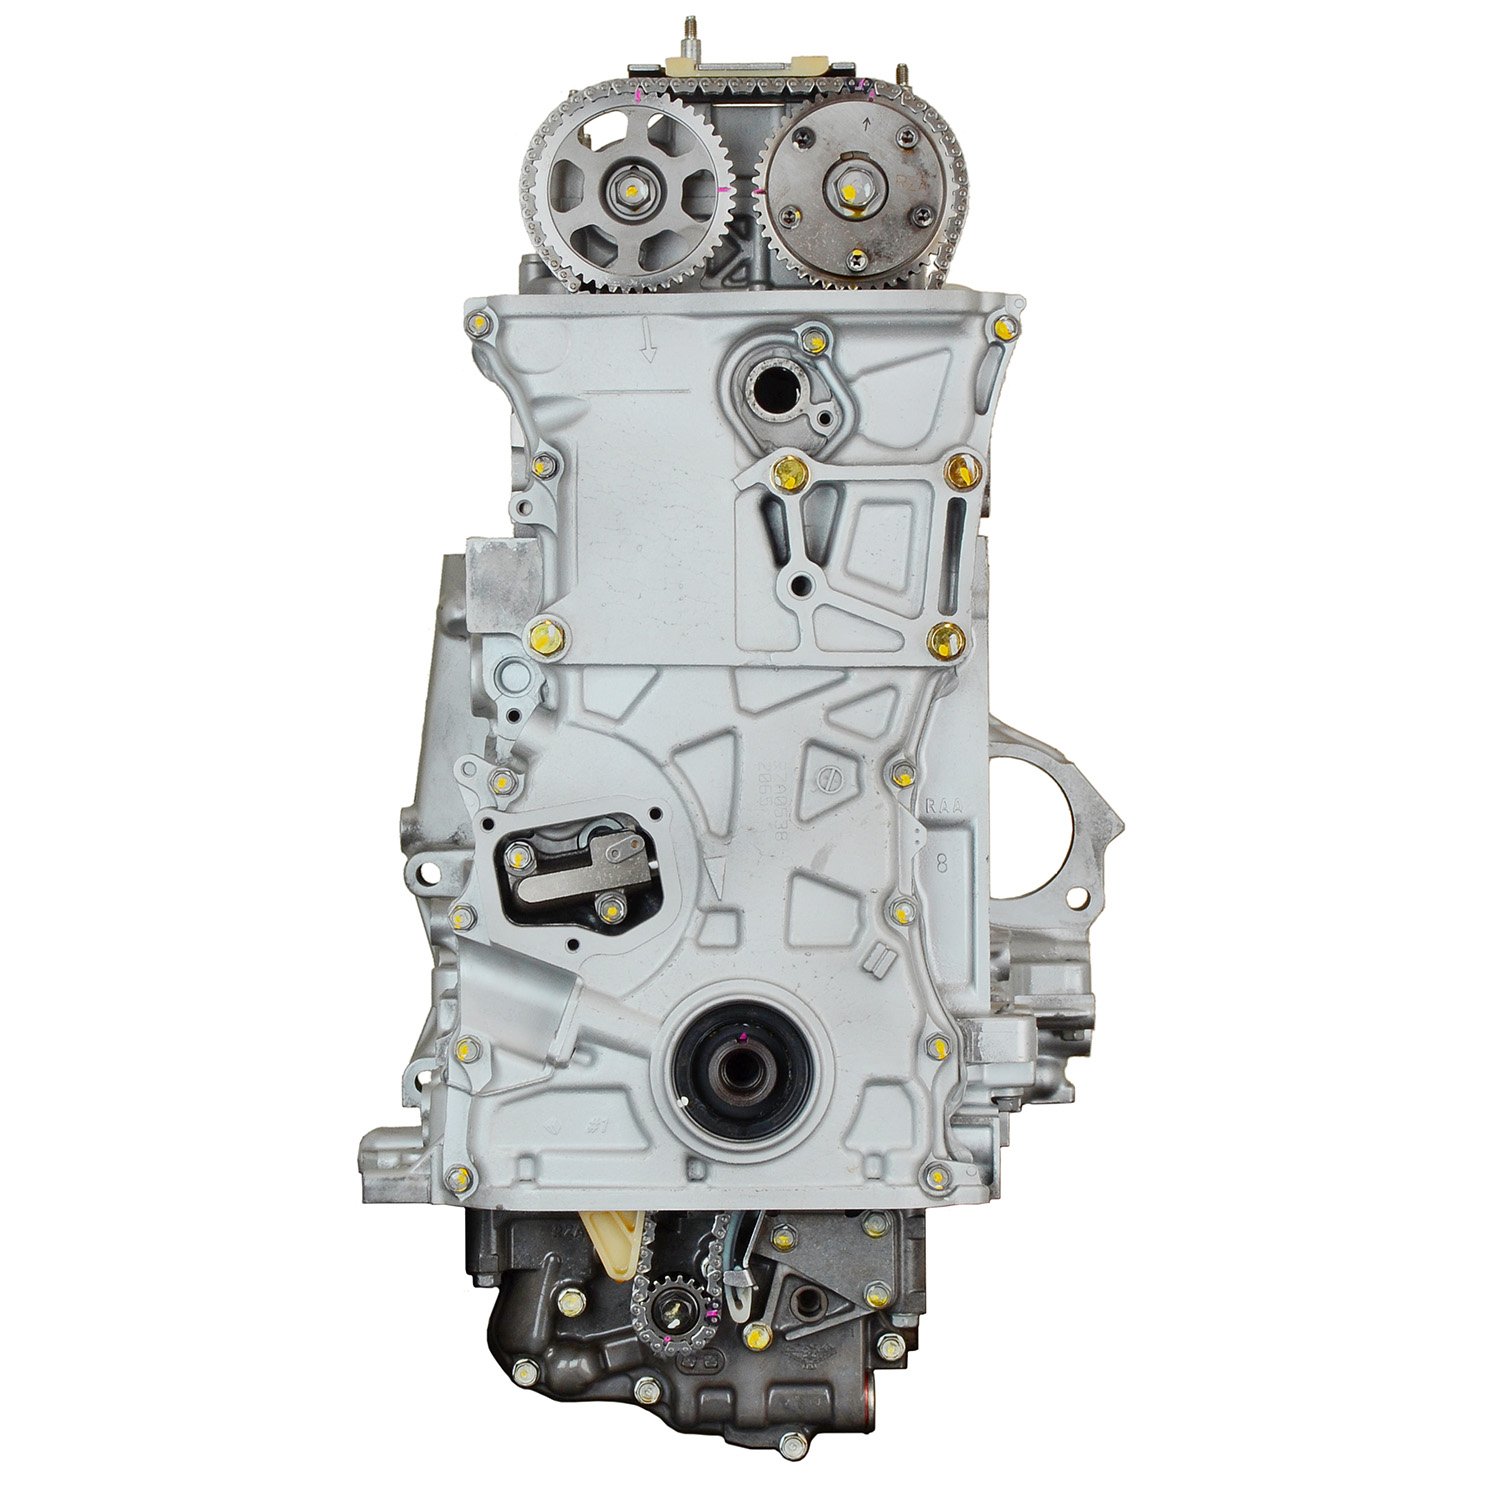 561 Remanufactured Crate Engine for 2007-2009 Honda CR-V with 2.4L L4 K24Z1